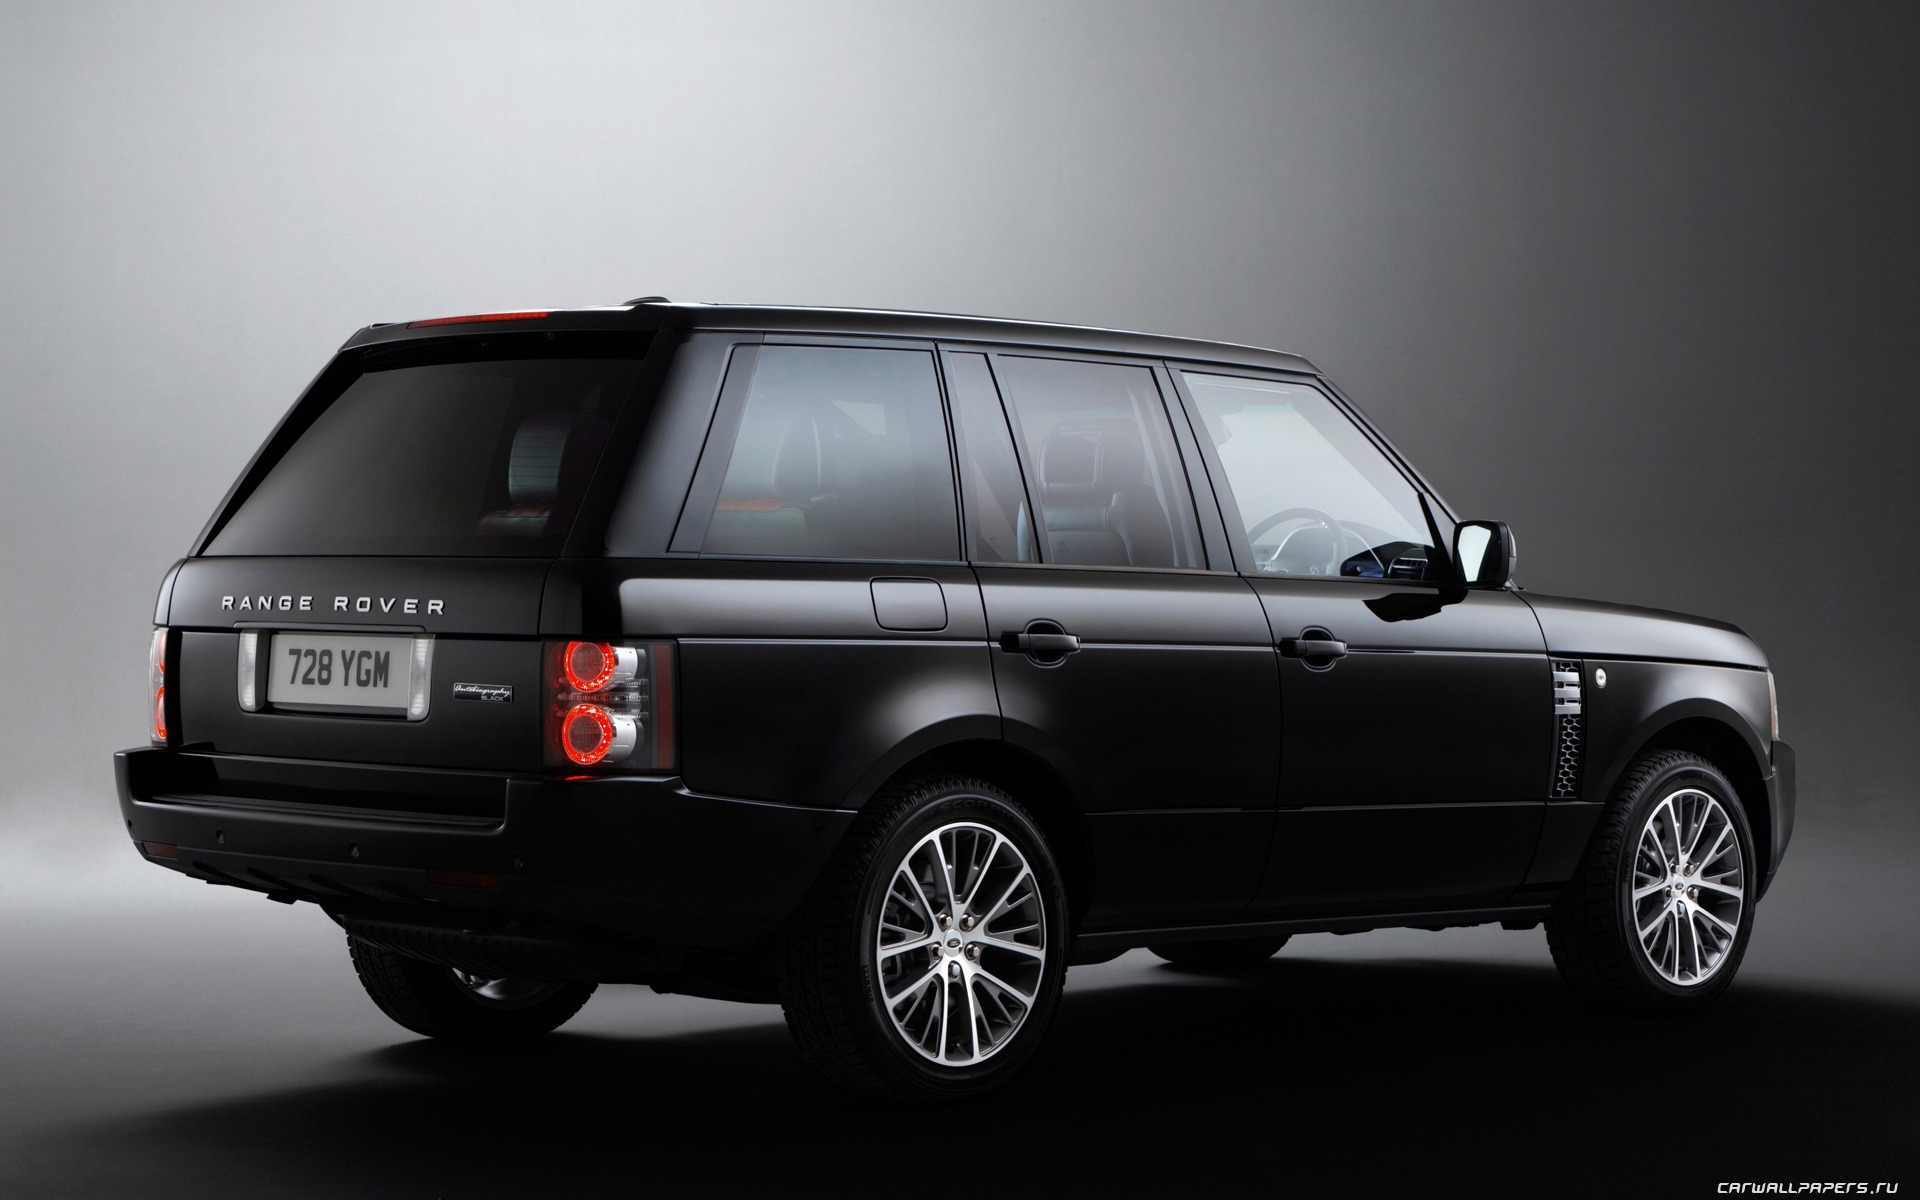 Land Rover Range Rover Black Edition - 2011 路虎19 - 1920x1200